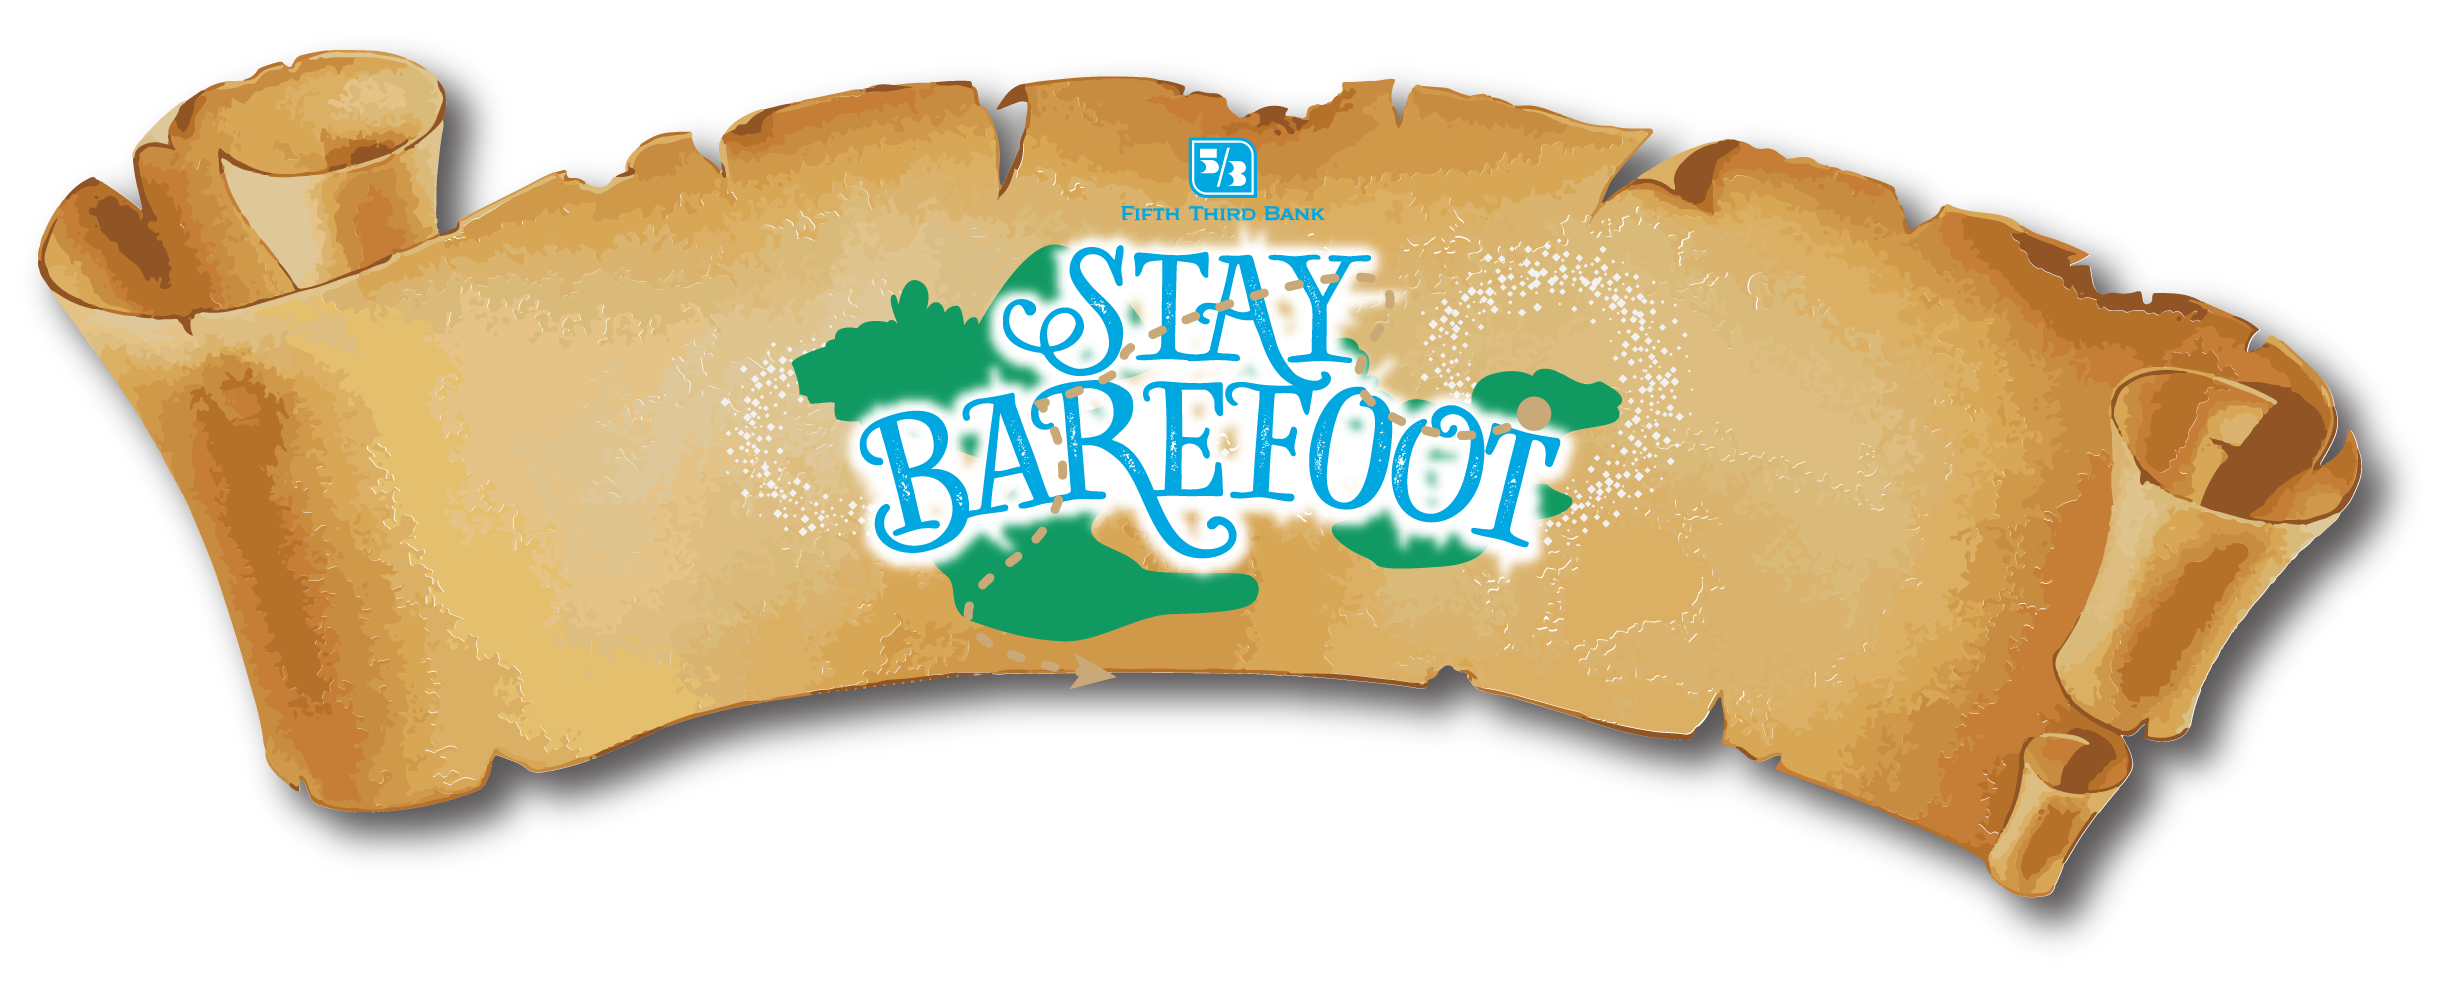 Stay Barefoot logo